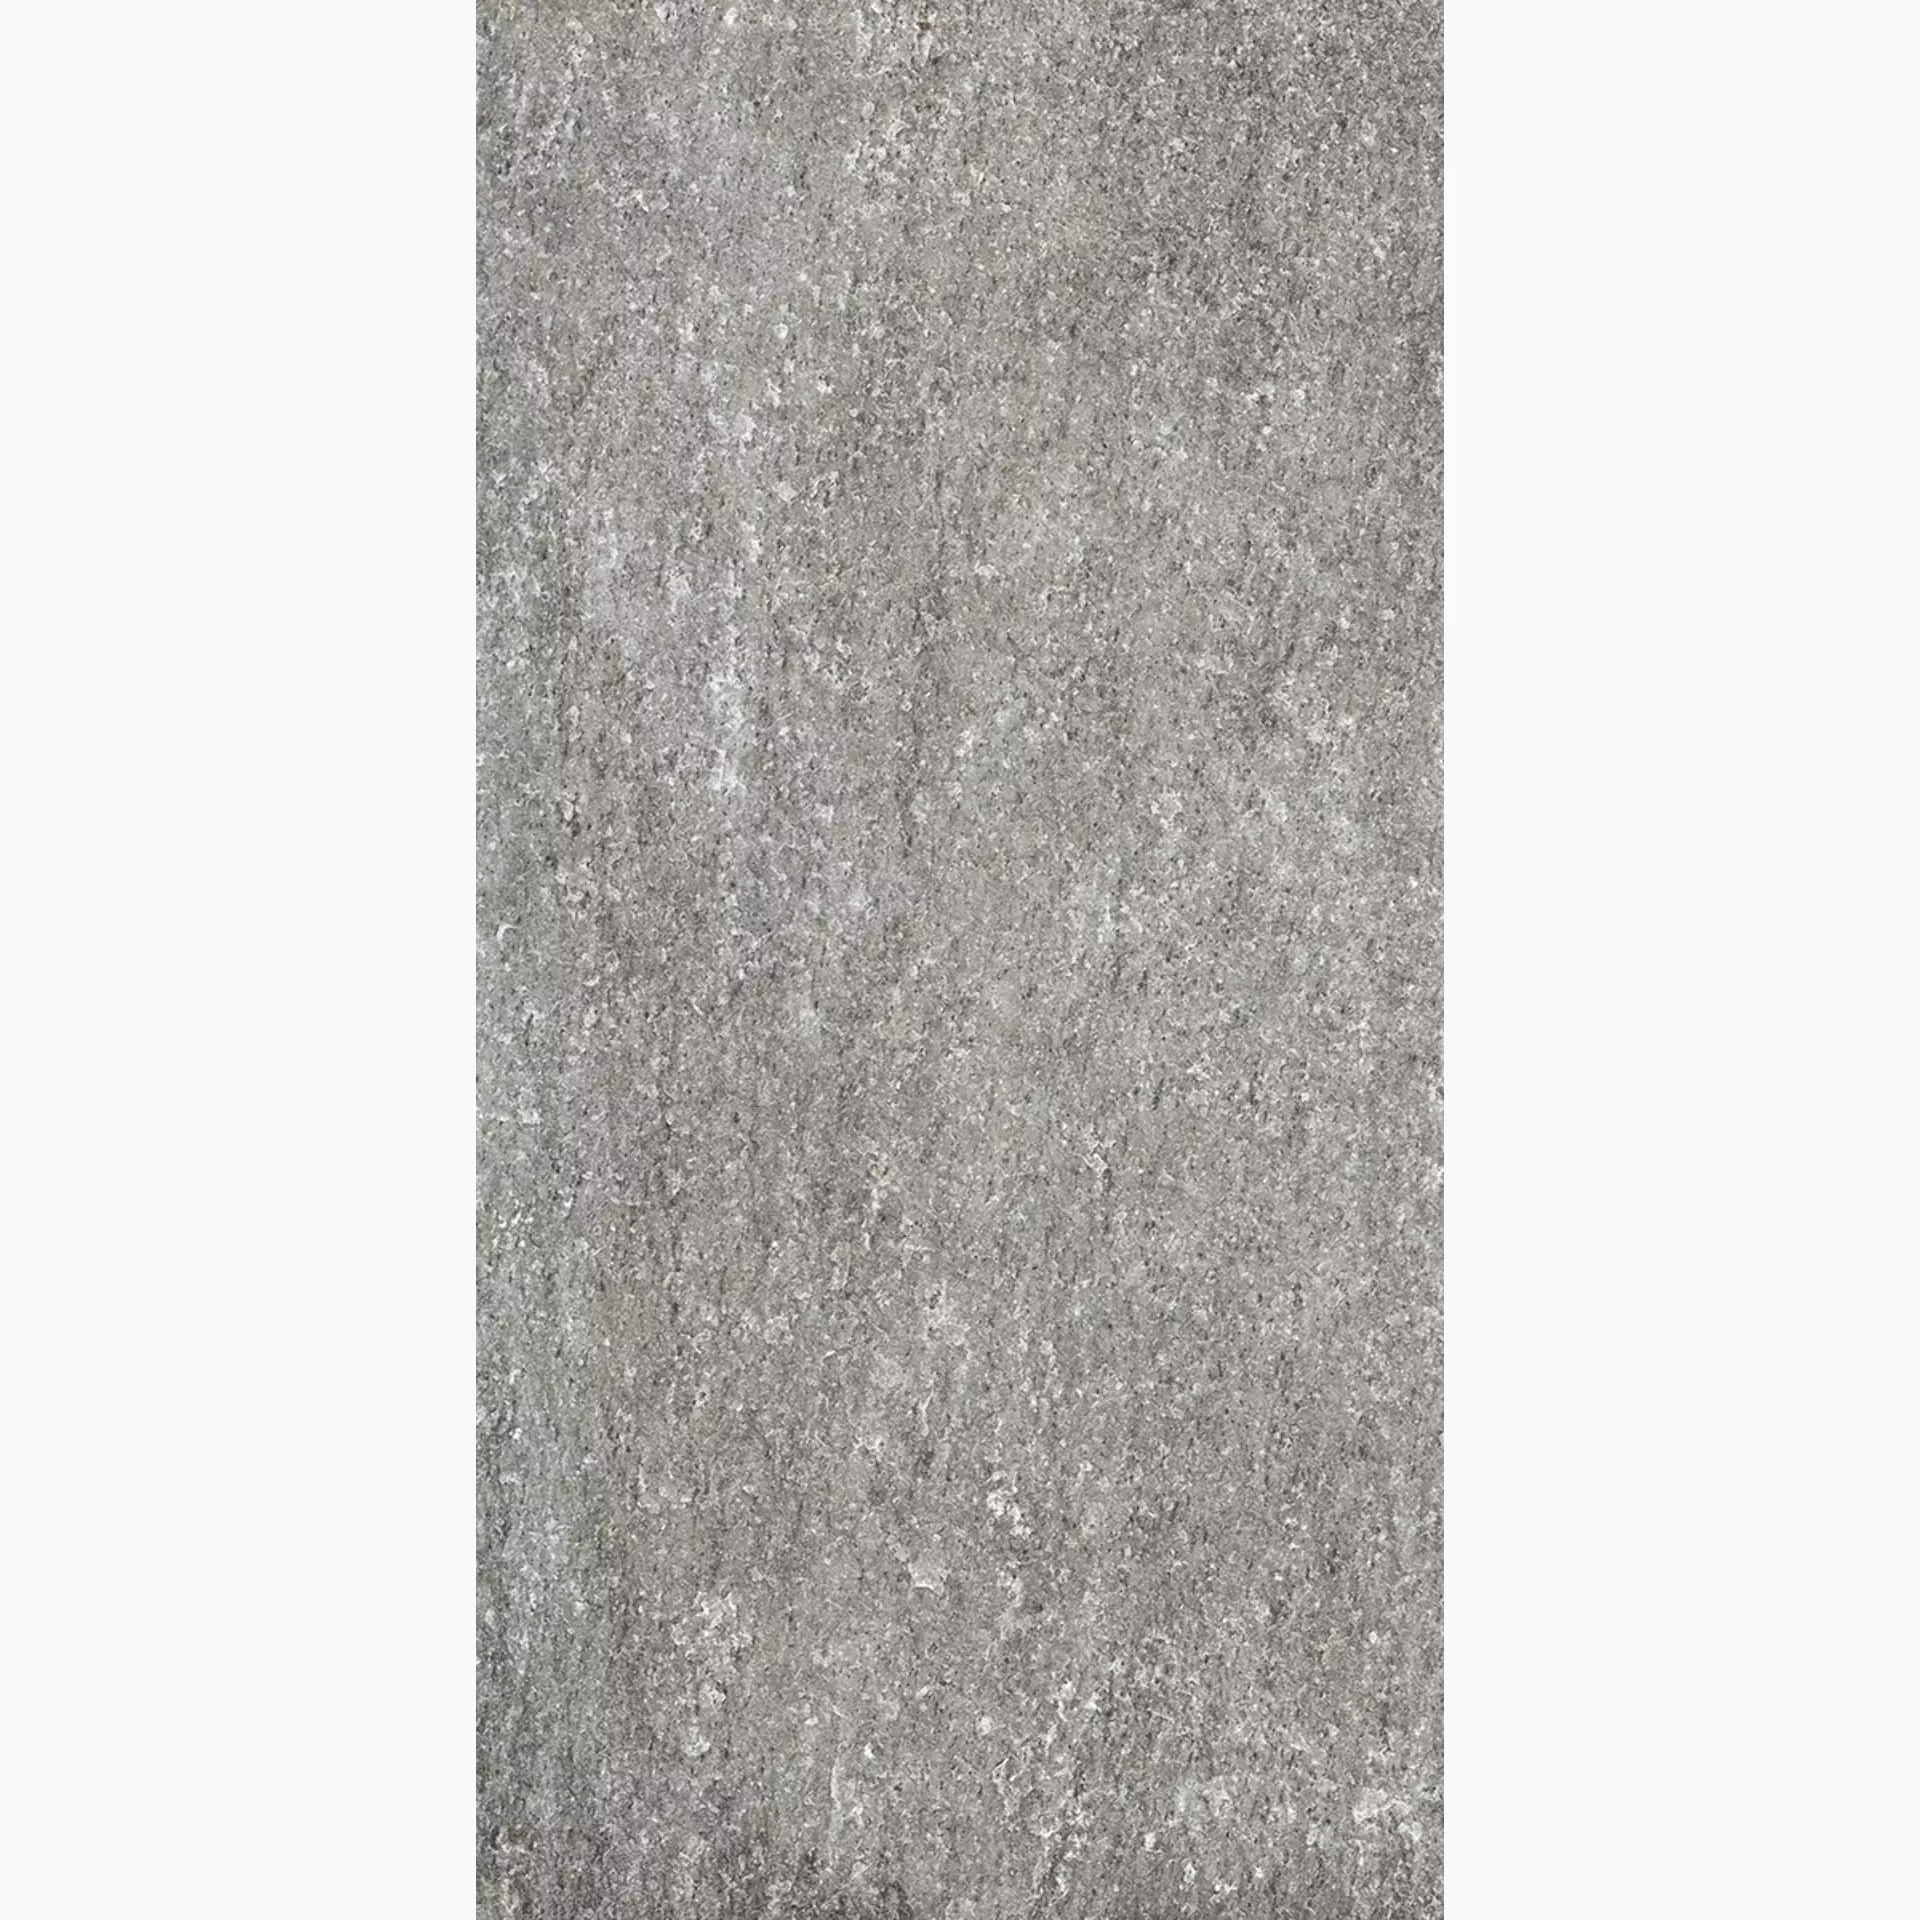 Rondine Quarzi Grey Naturale J87295 30,5x60,5cm 9,5mm